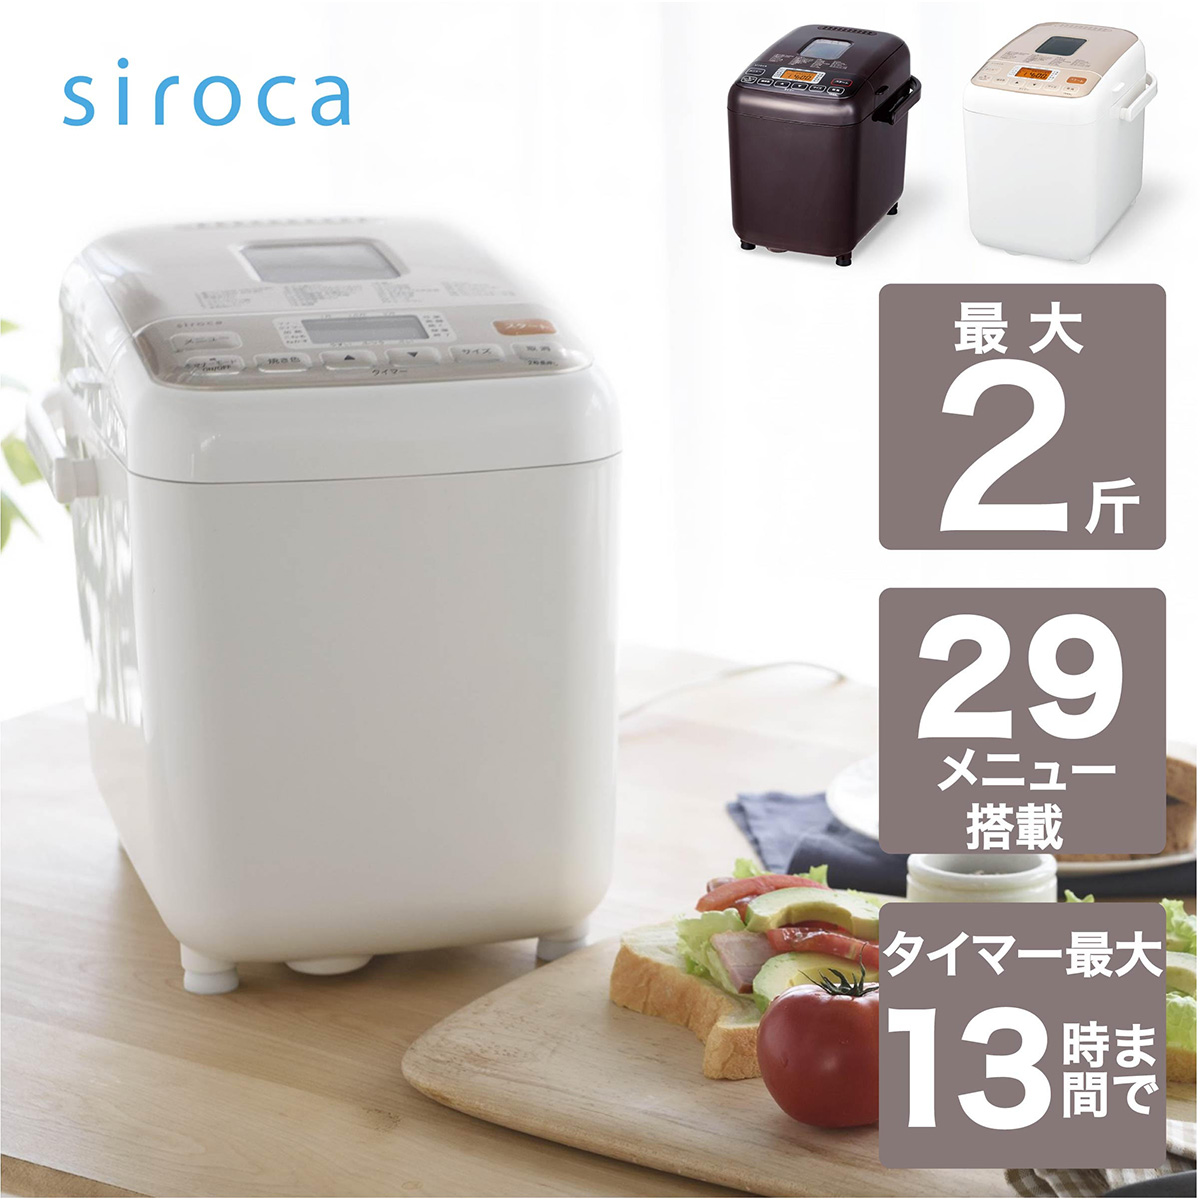 siroca 全自動ホームベーカリー 29メニュー 最大2斤 餅つき機 レシピ付 ホワイト